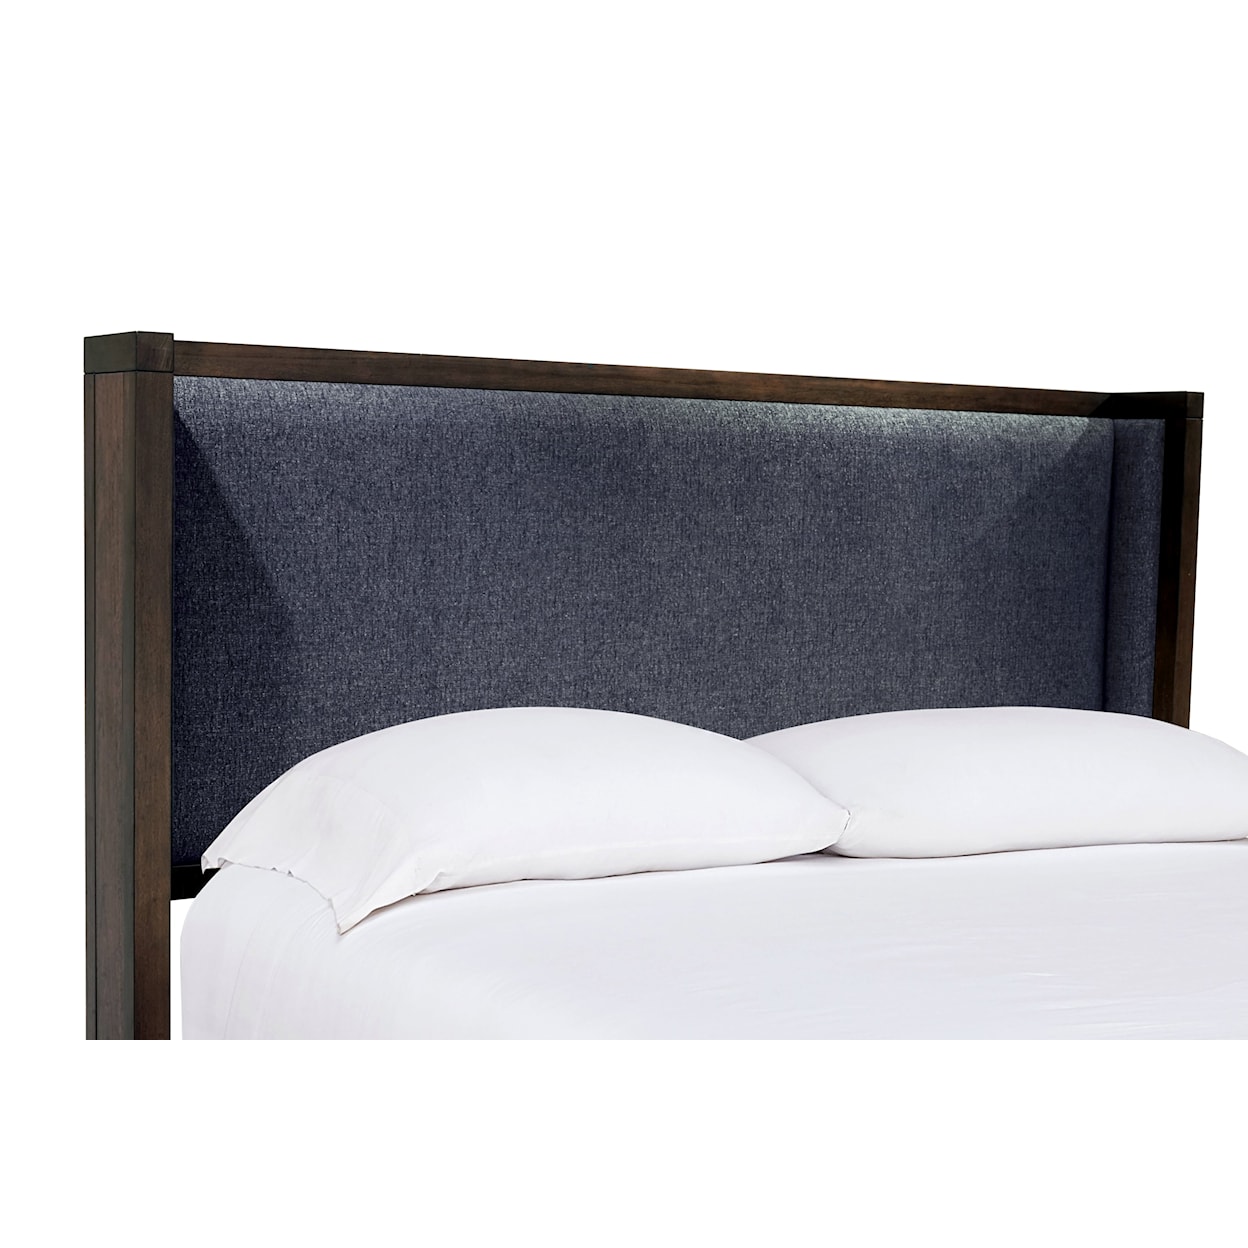 Modus International Boracay King Upholstered Storage Bed